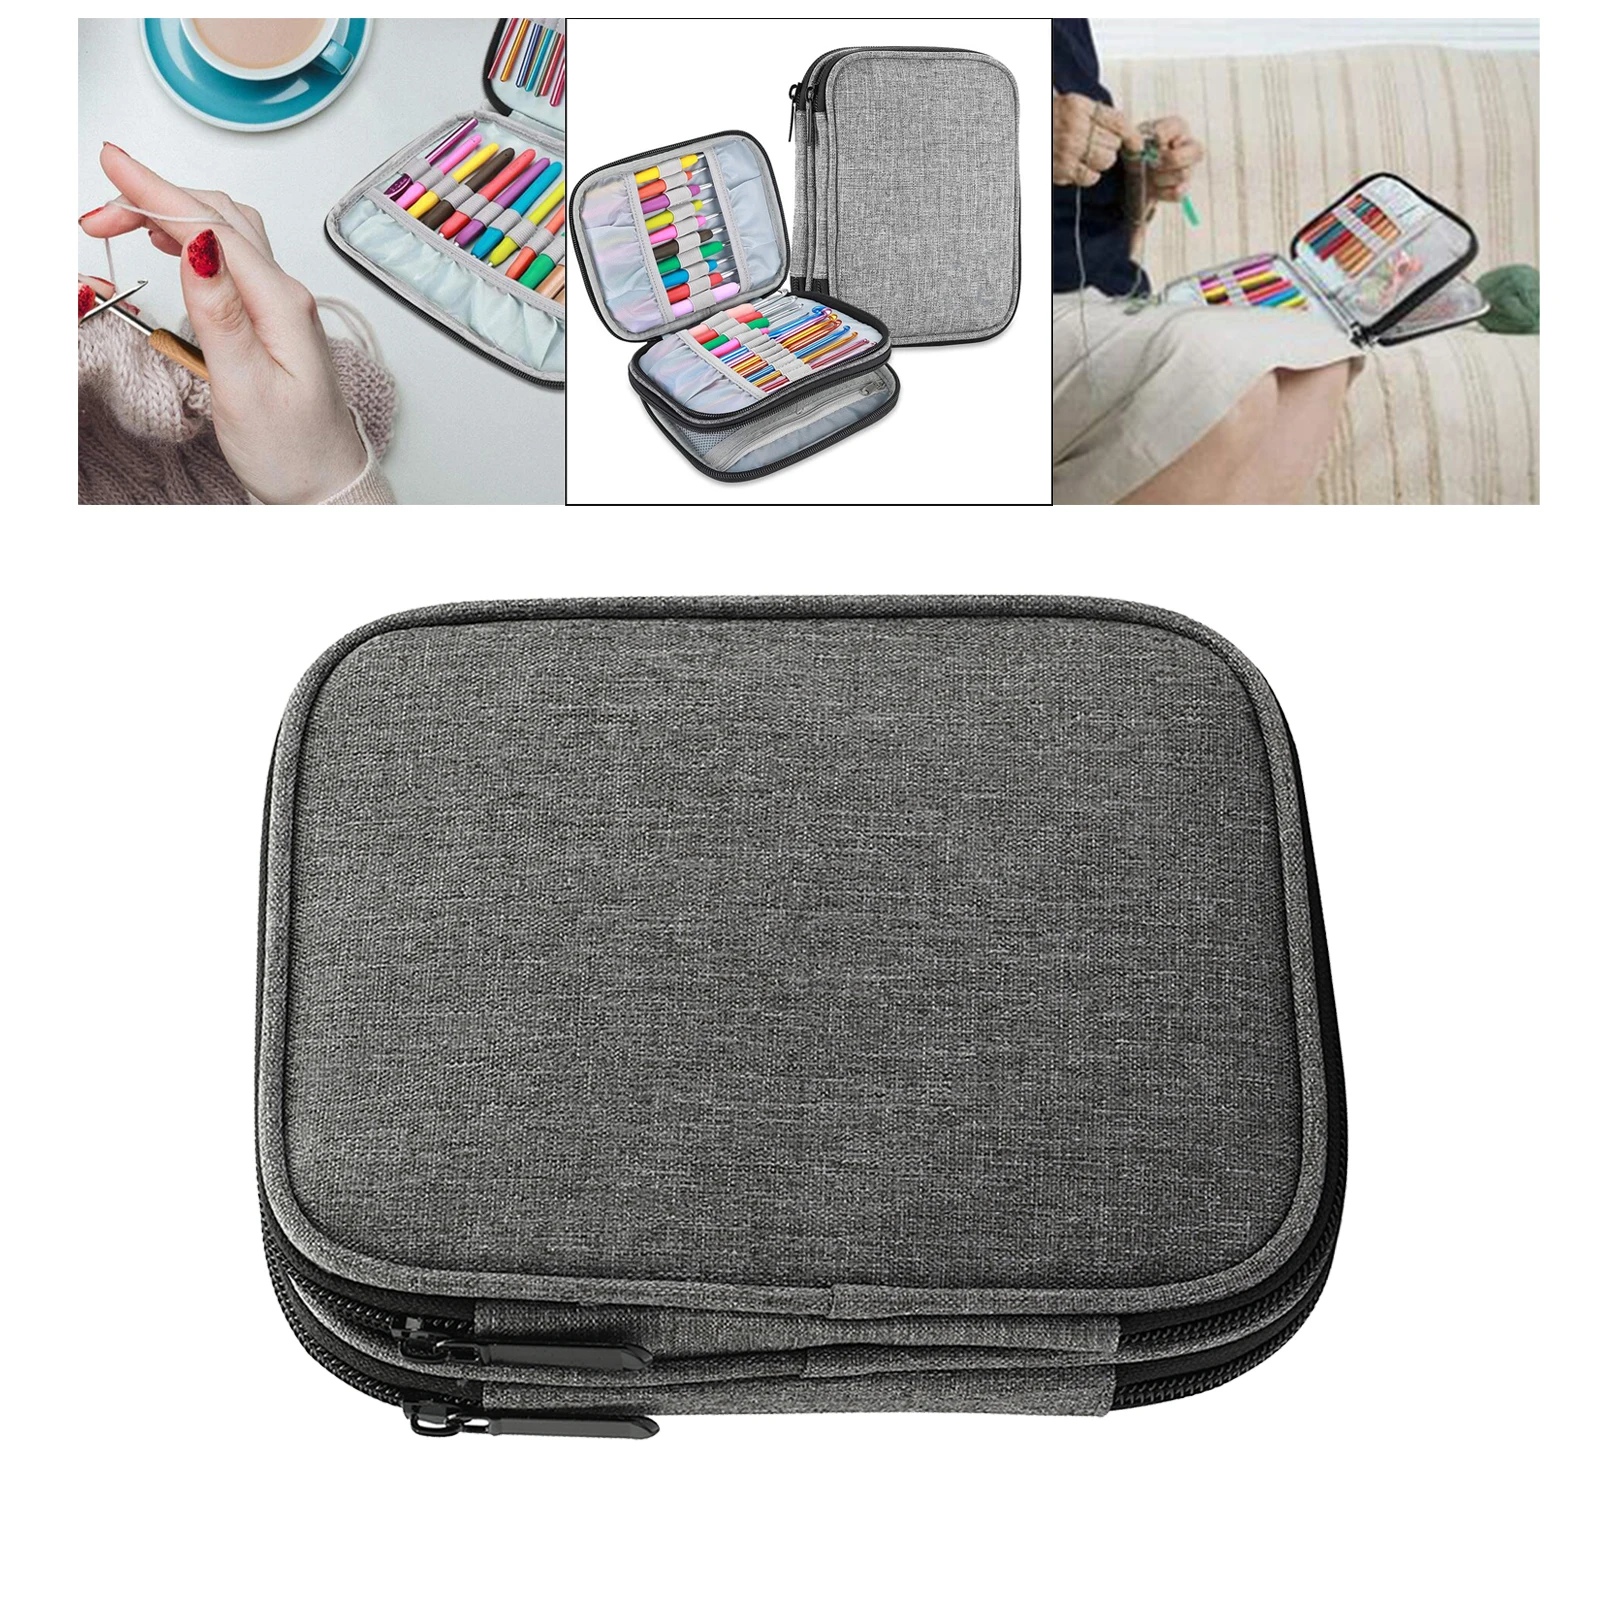 Portable Crochet Hook Case Knitting Needles Organizer Zipper Bag Storage Tote with Web Pockets & Slots Oxford Fabric Case